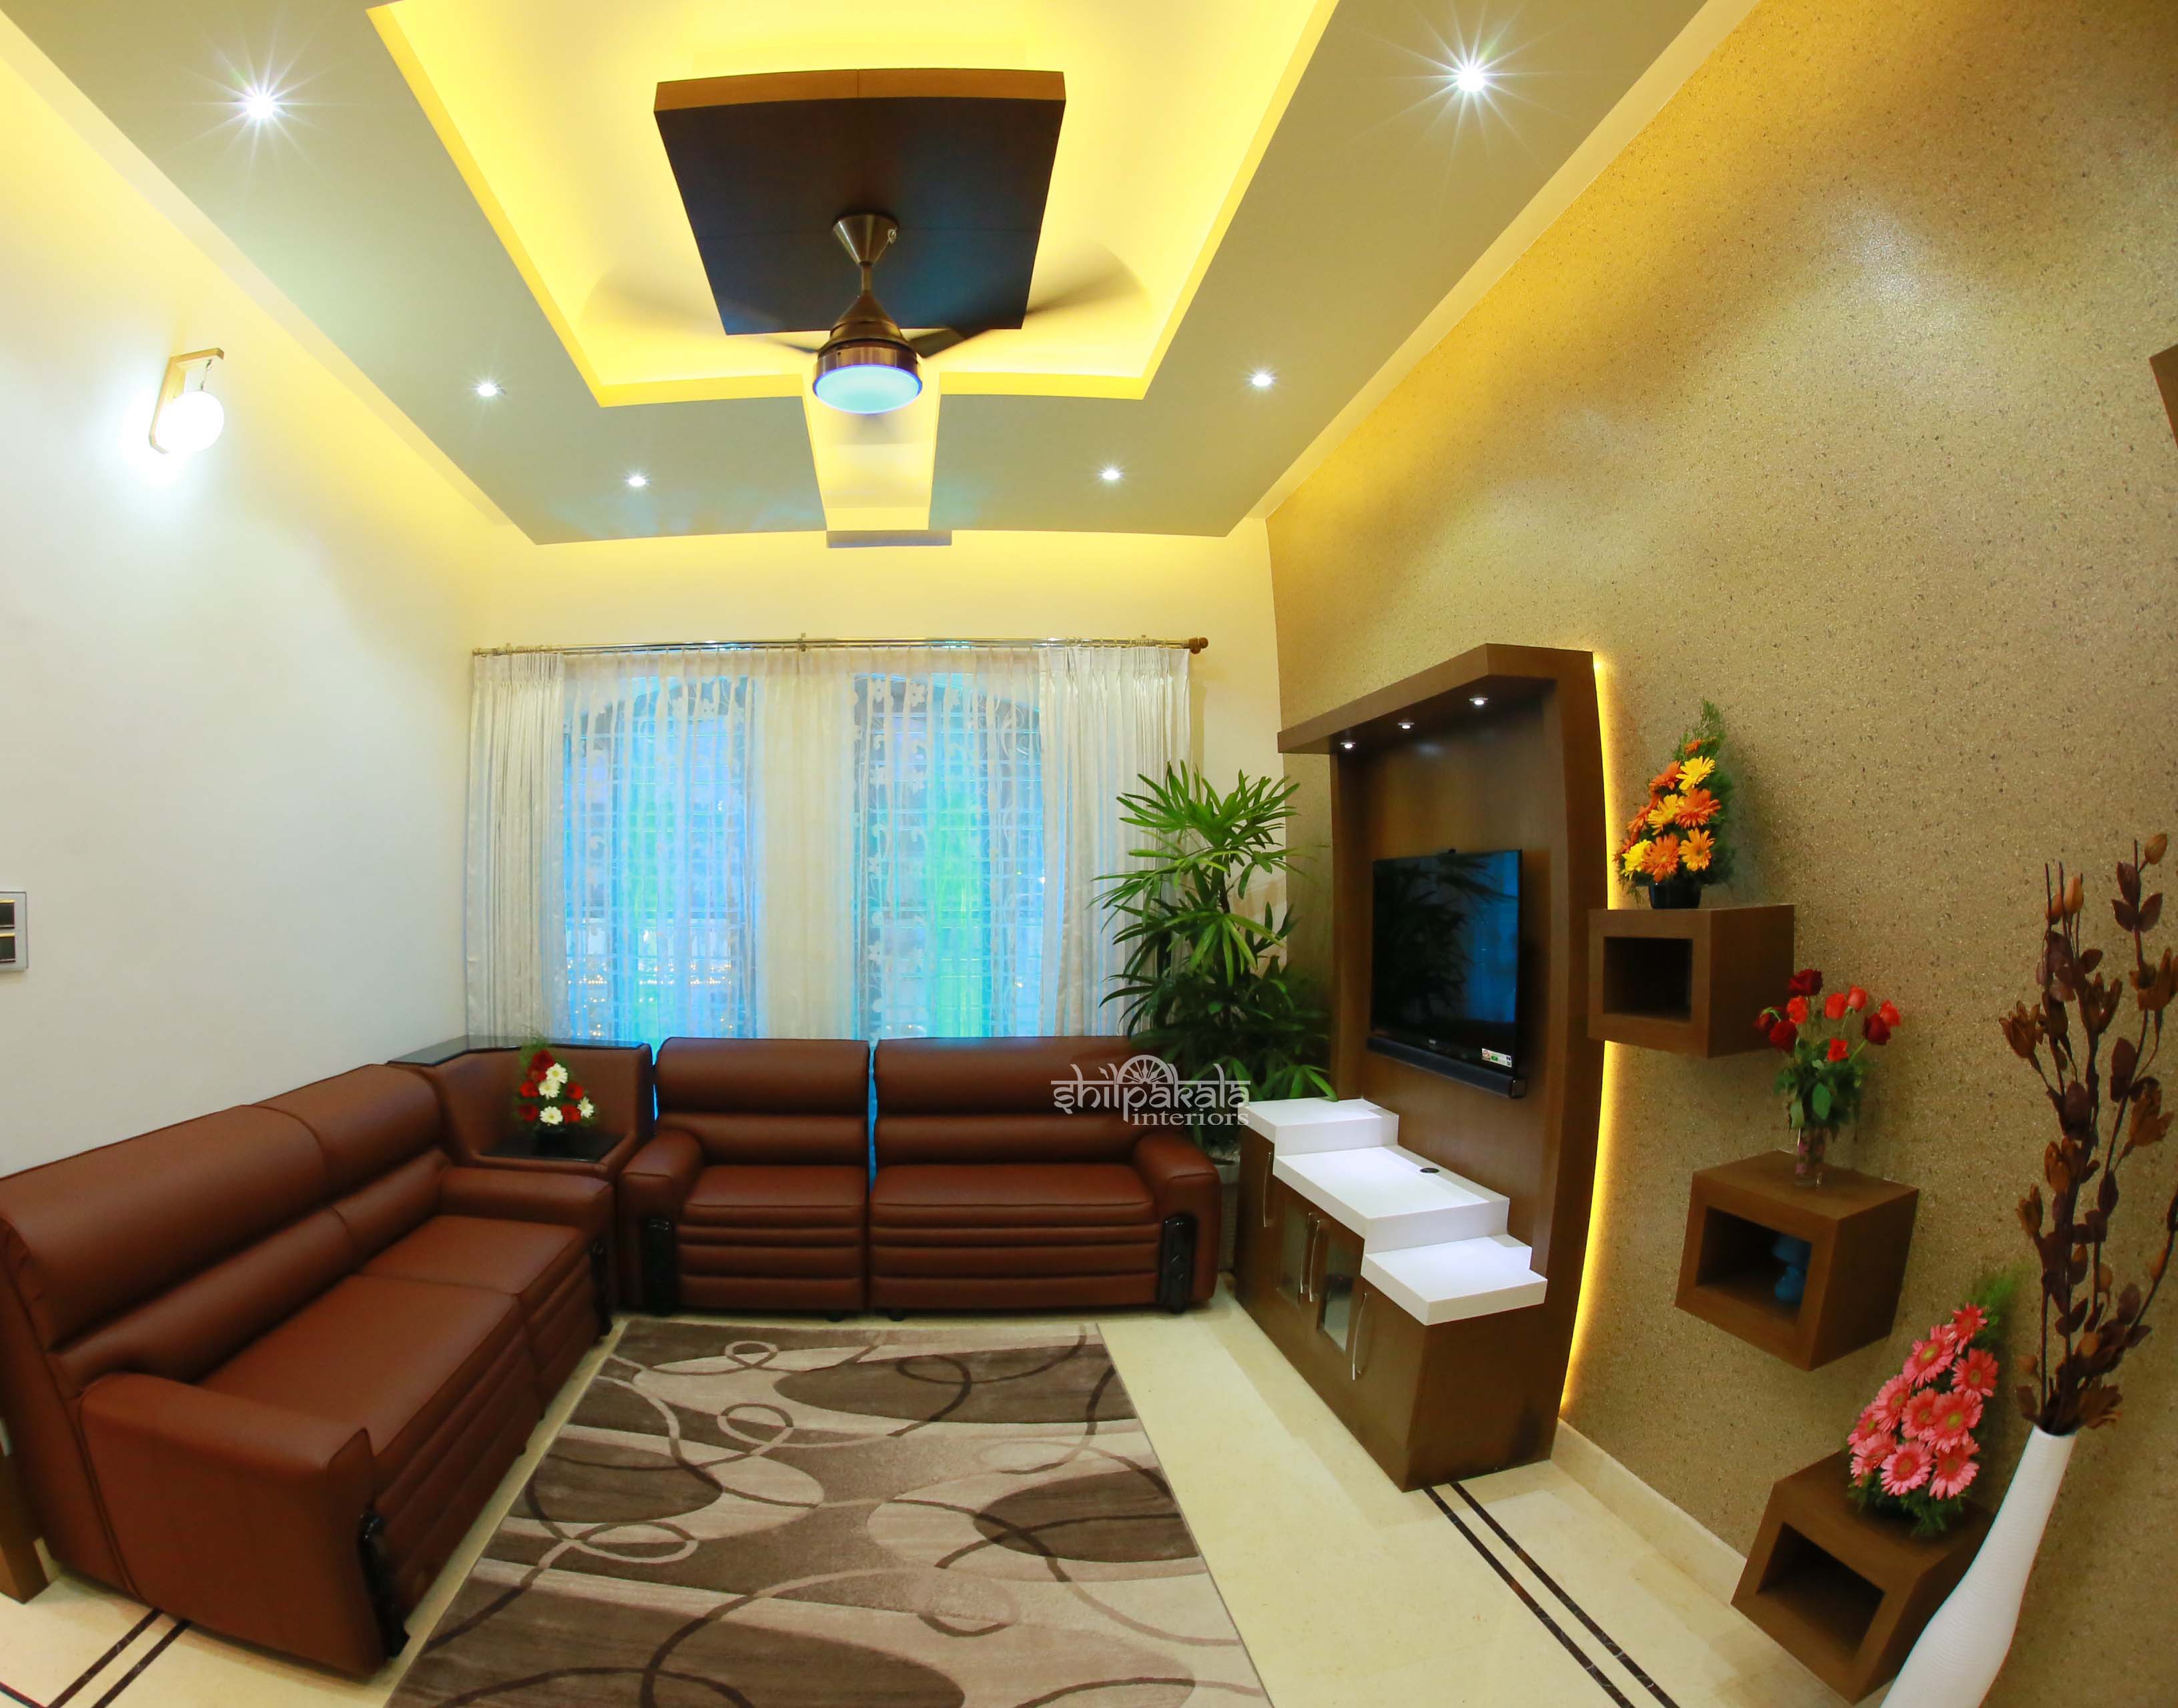 kerala home living room designs